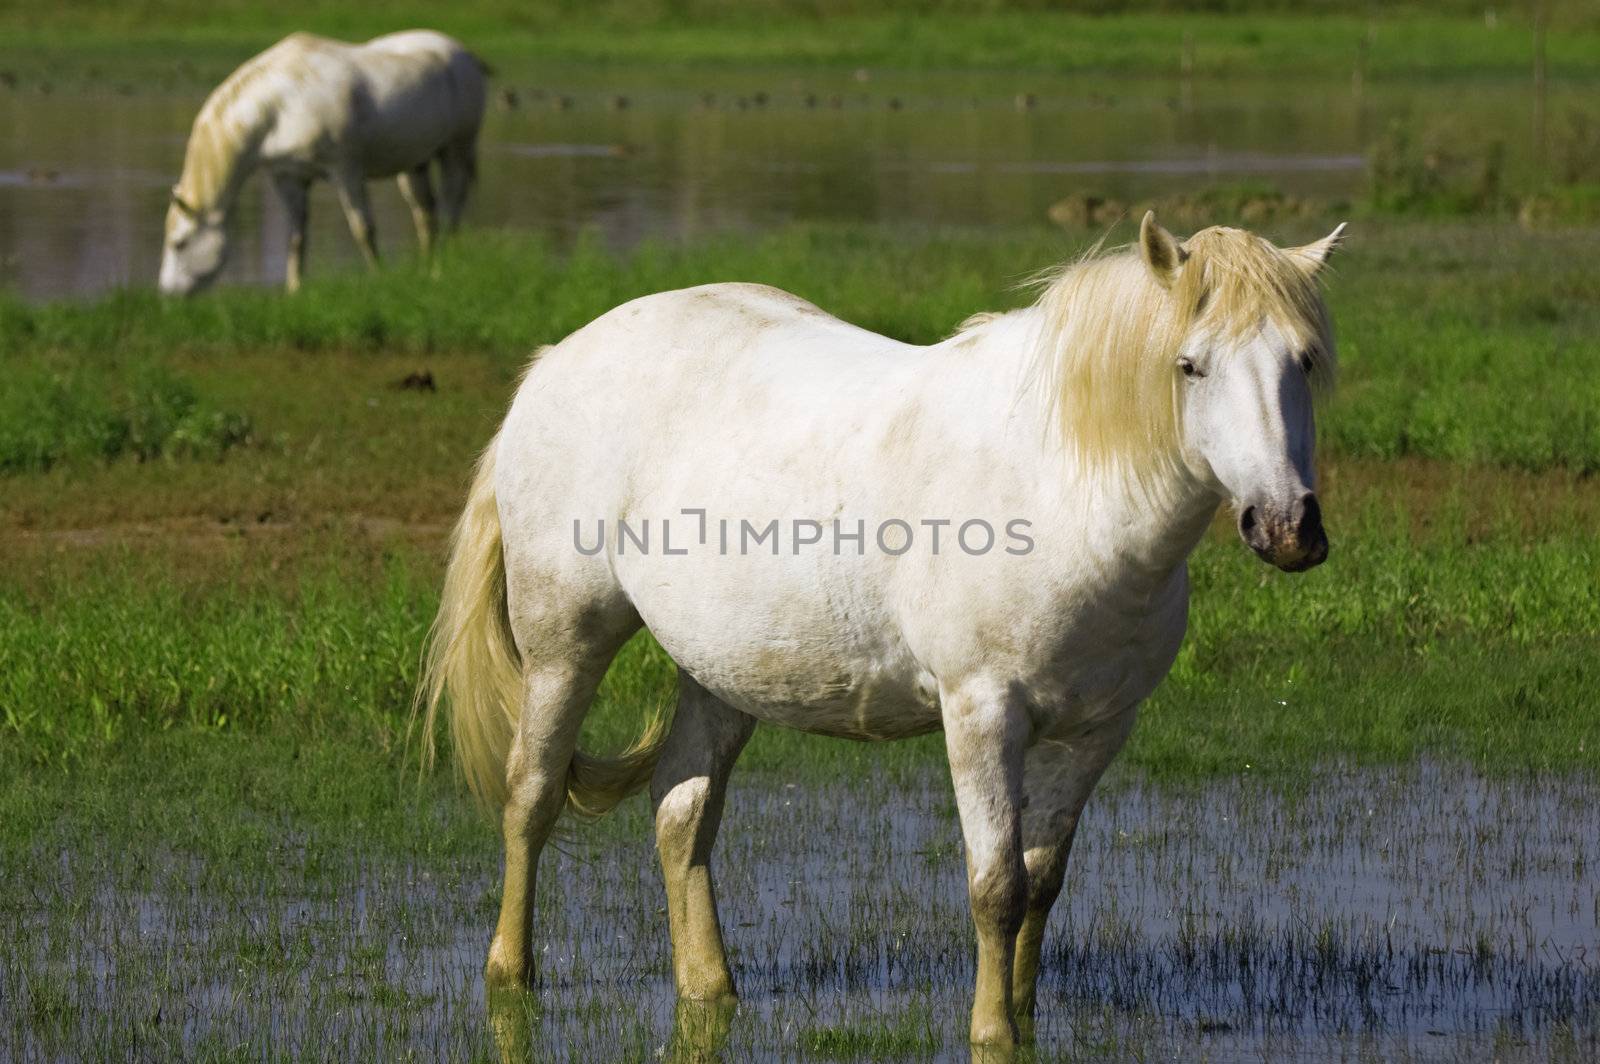 White horses by lebanmax